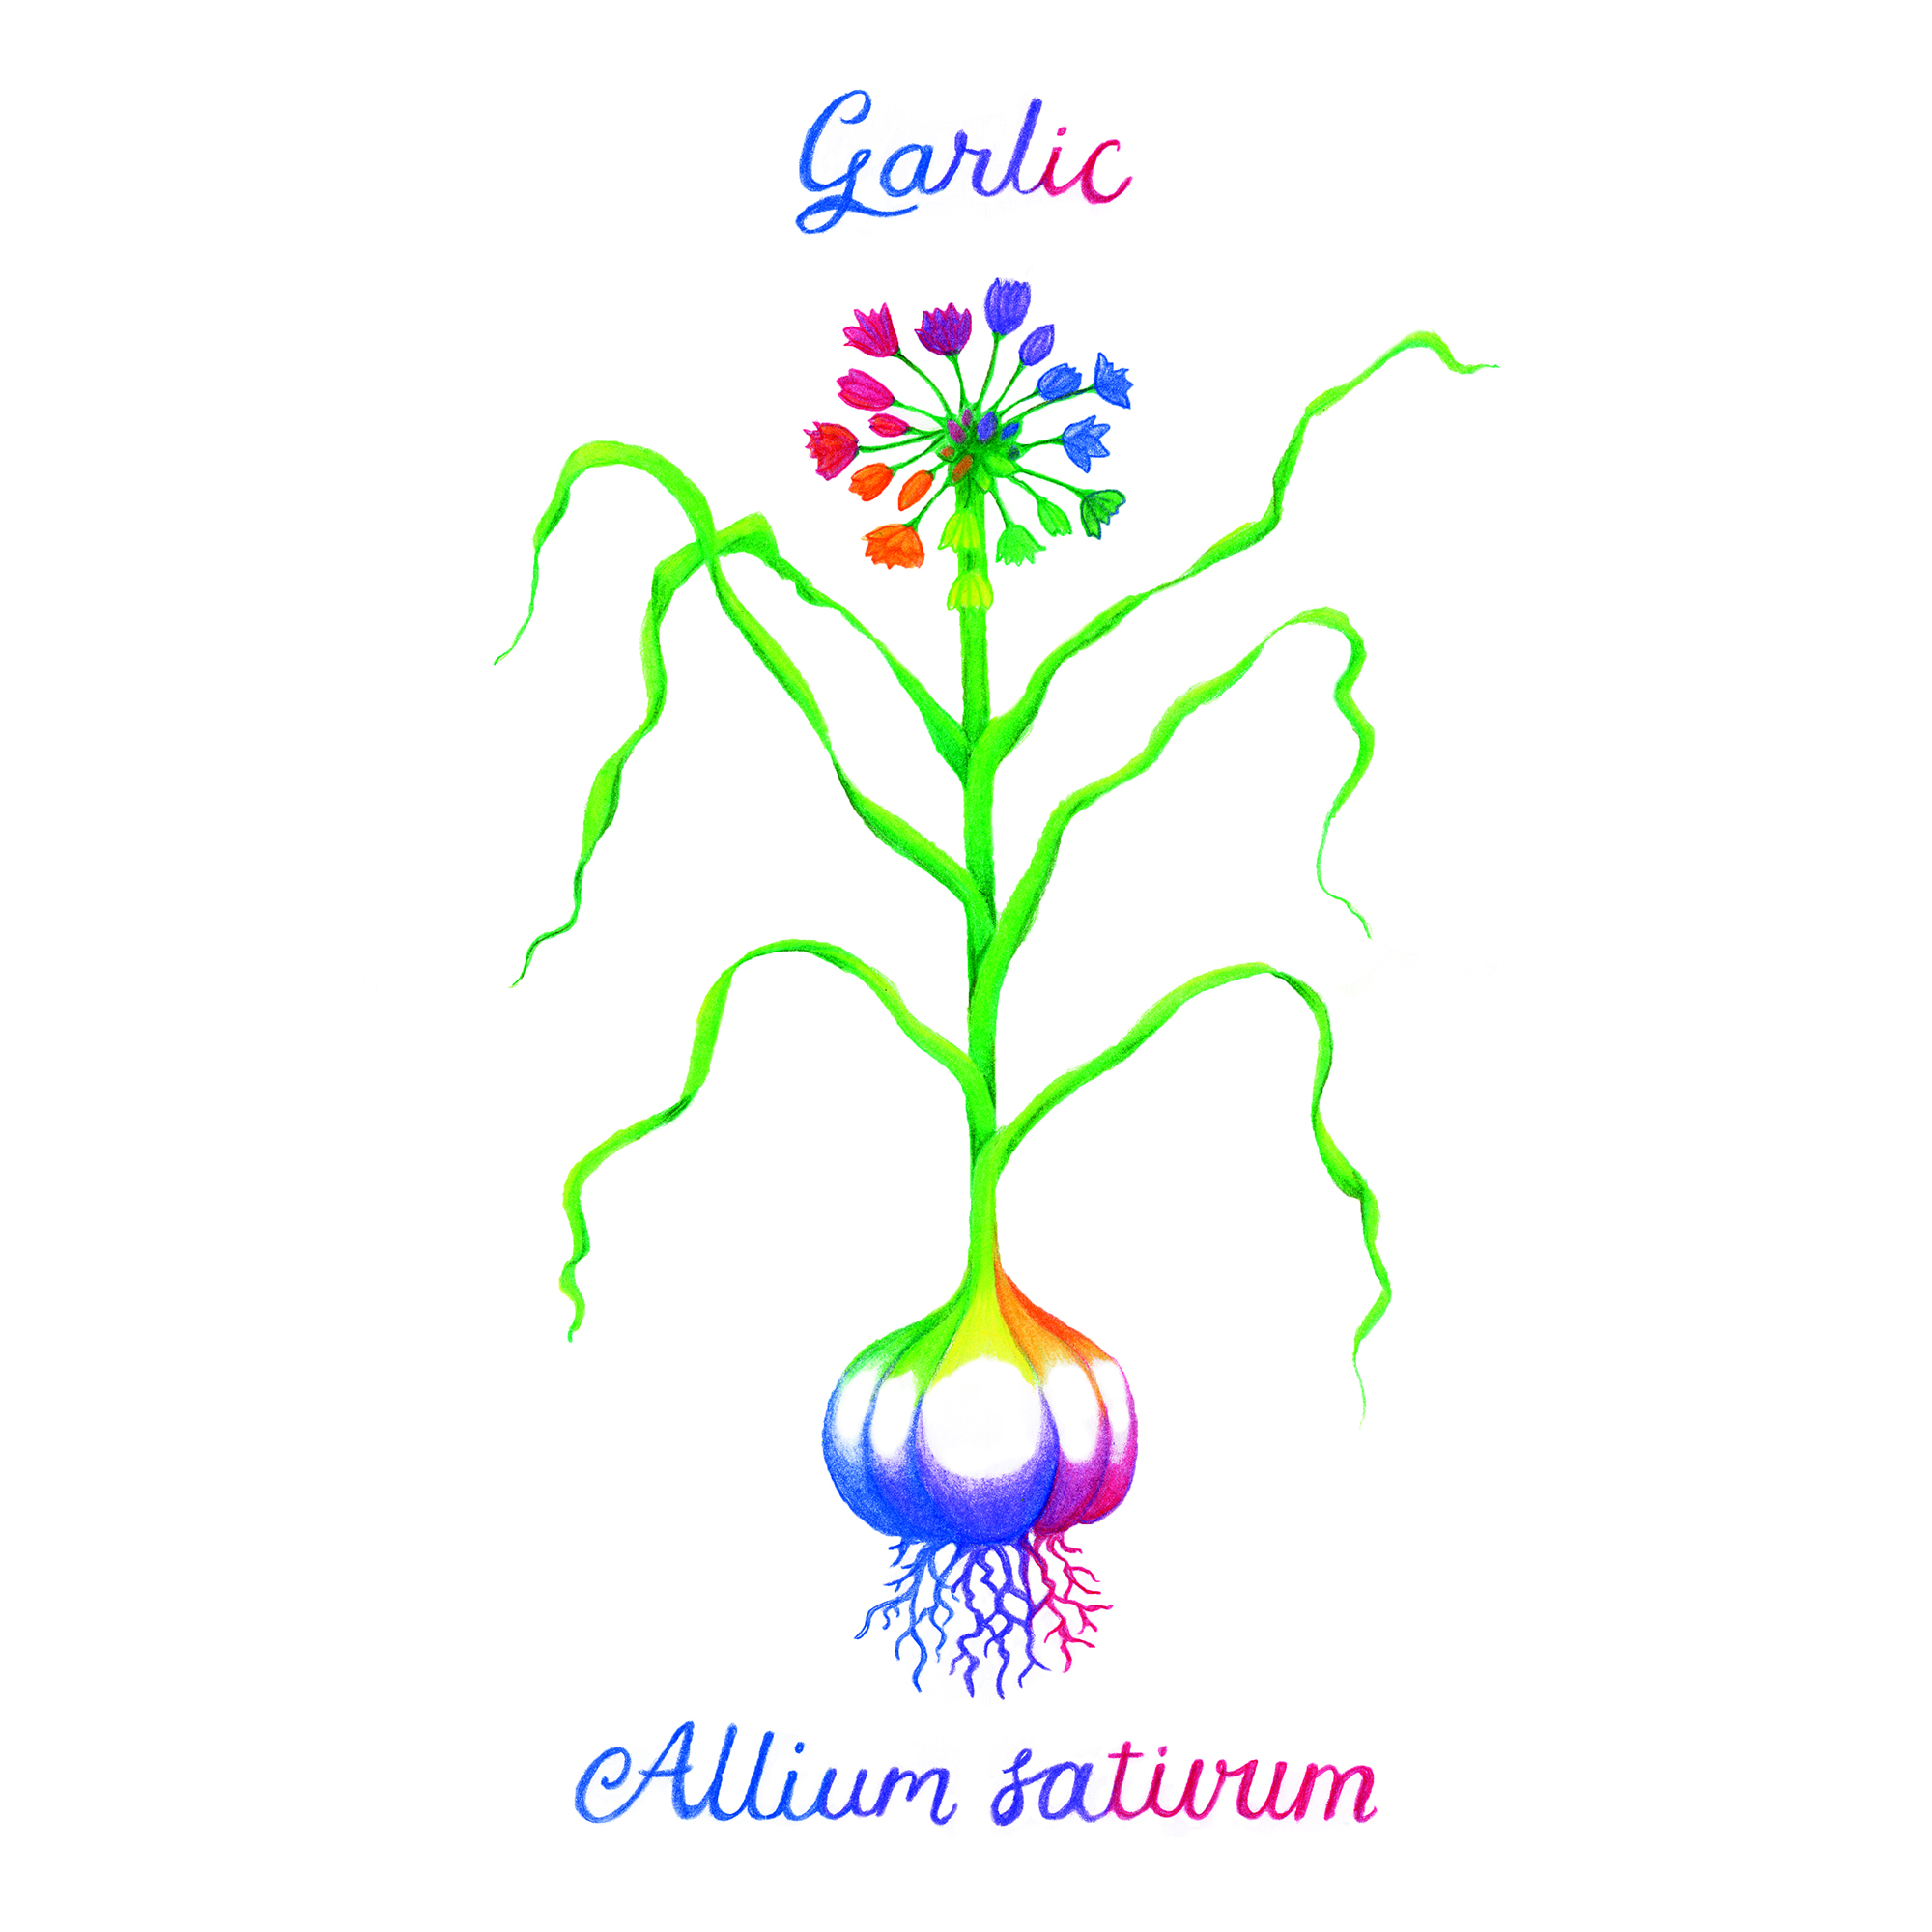 Rainbow Garlic Illustration